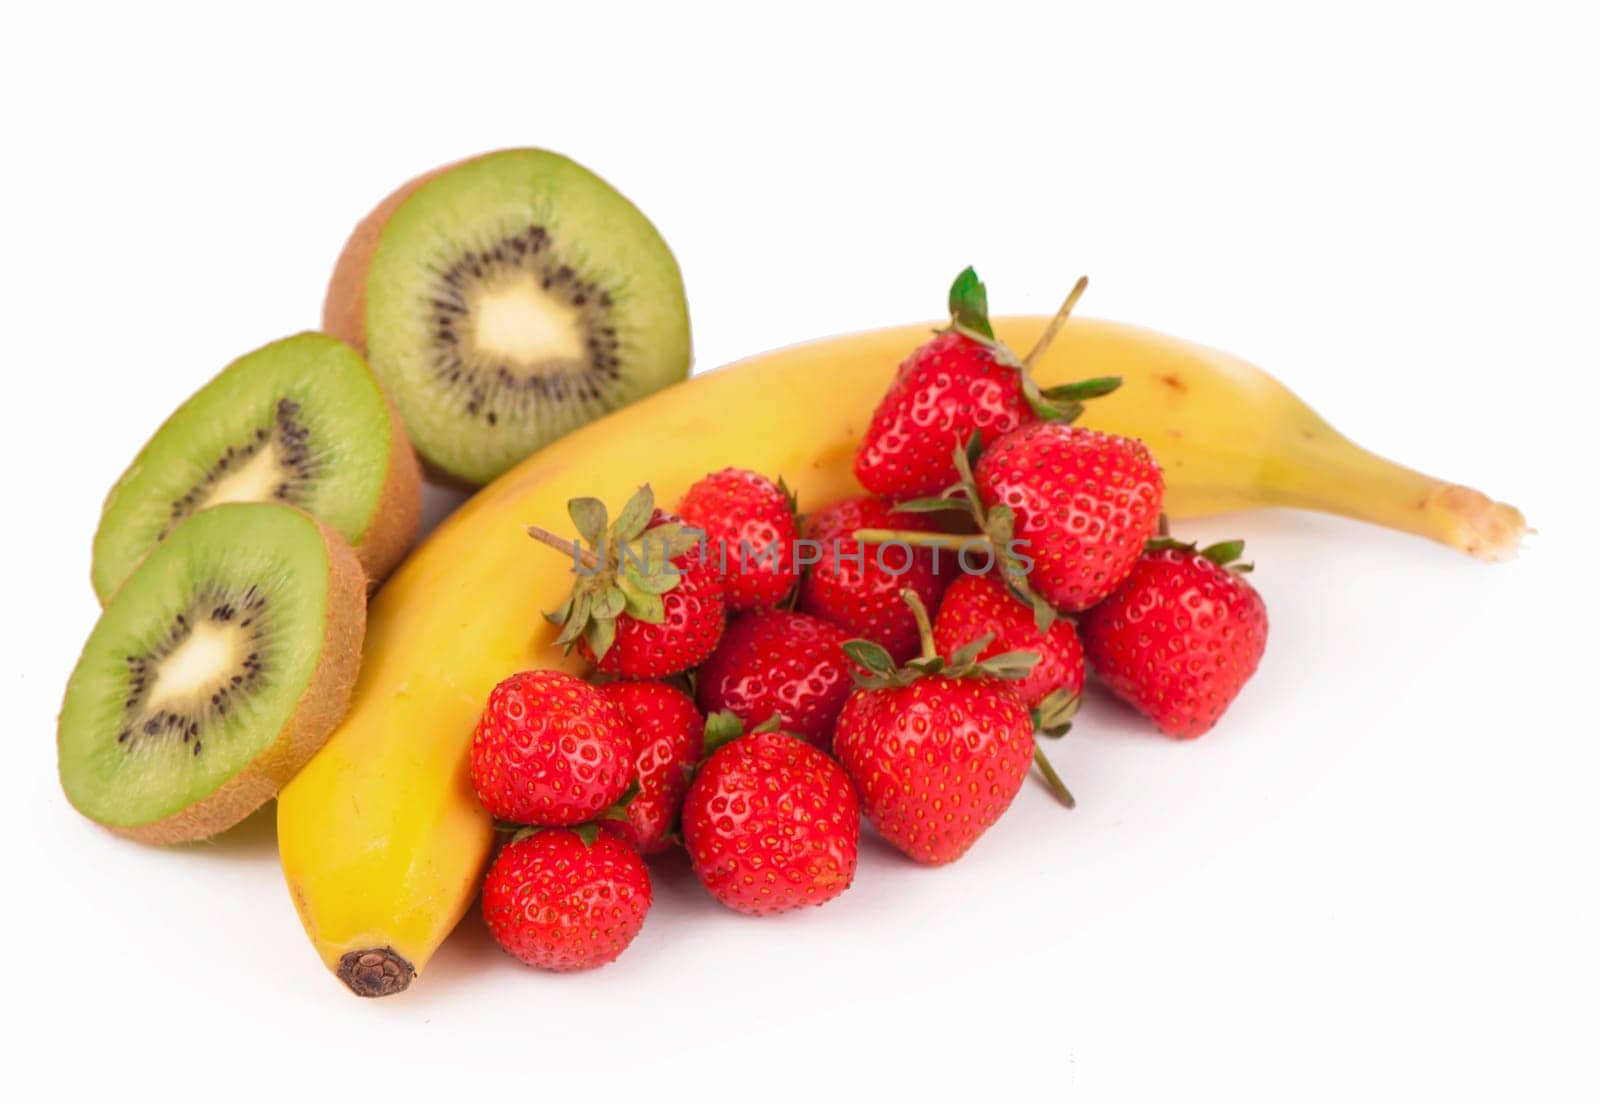 Bananas, kiwi and strawberry isolated on a white background